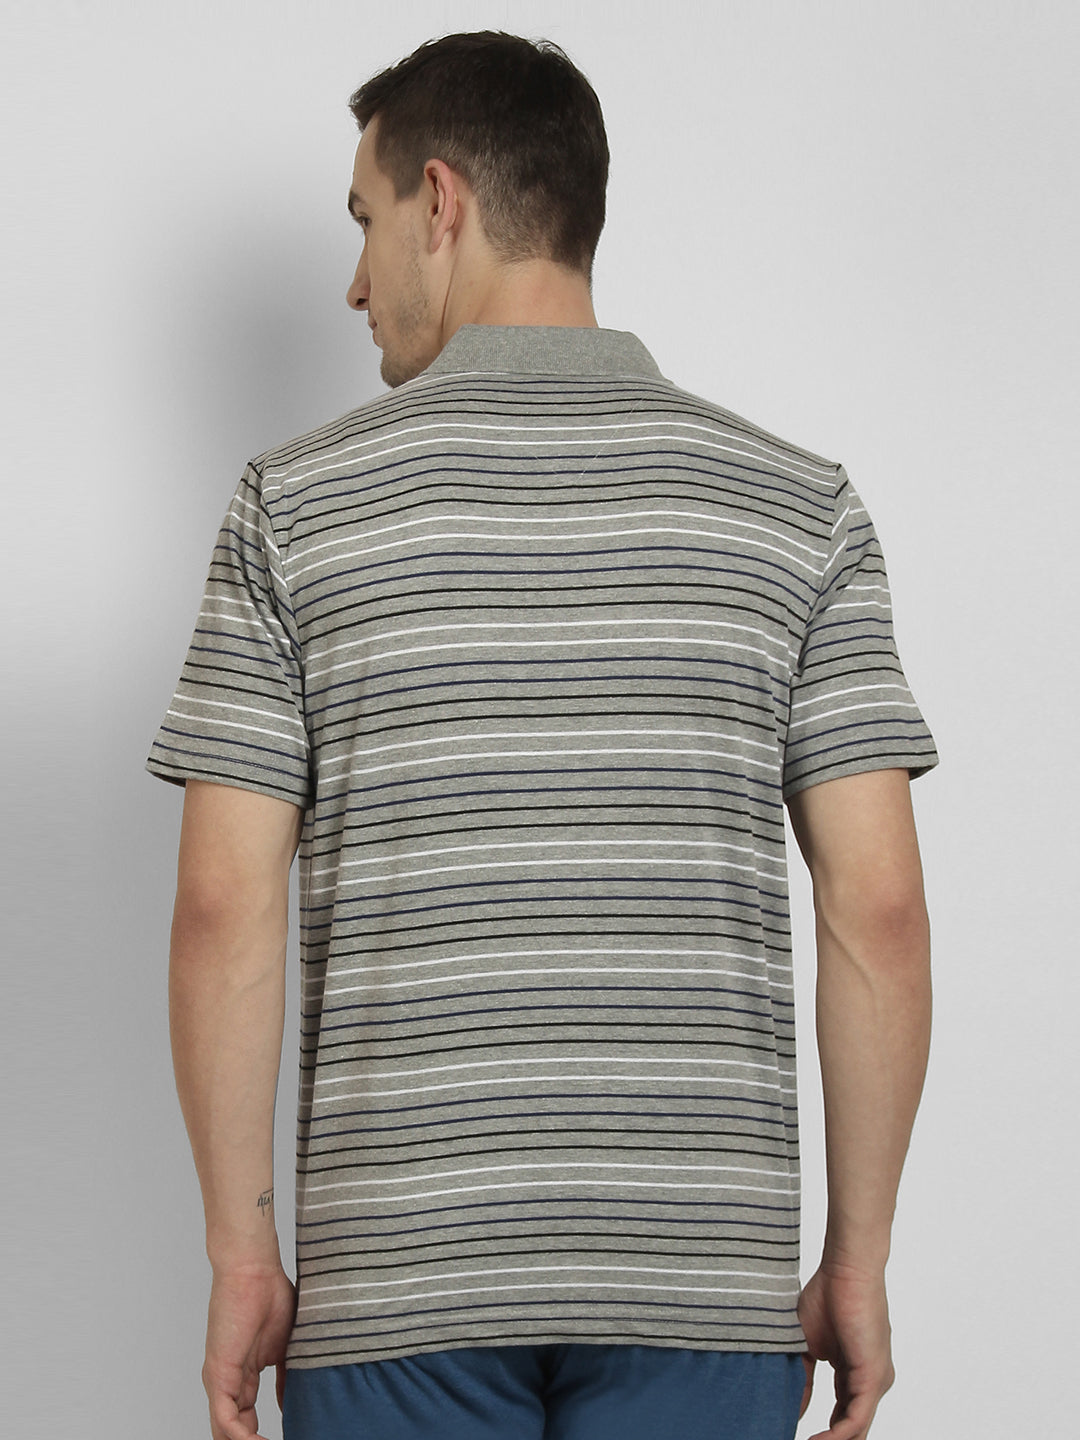 Neva Polo Neck Men's T-Shirt in Stripes Pattern Half Sleeve-15%Milange Grey